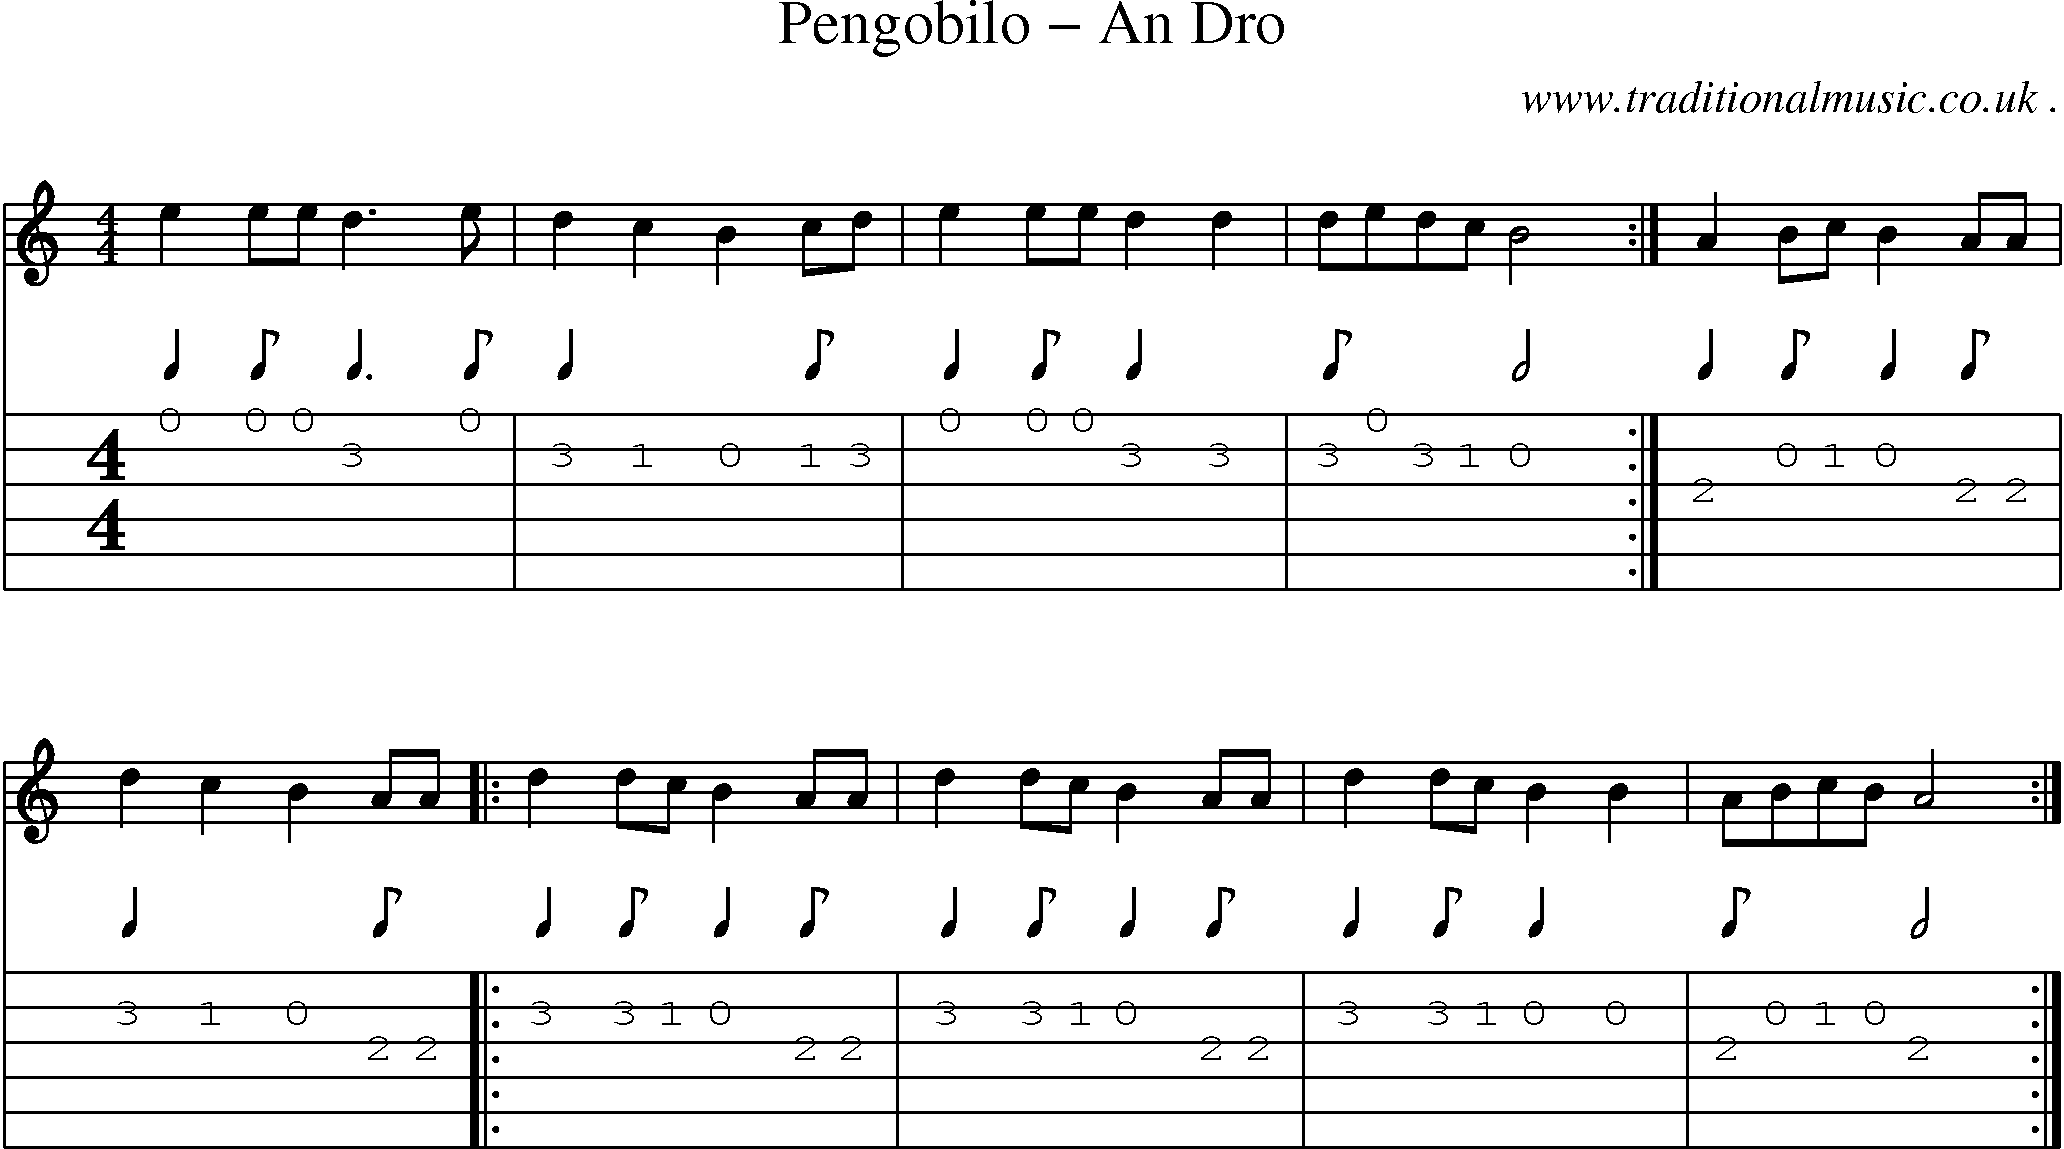 Sheet-Music and Guitar Tabs for Pengobilo An Dro